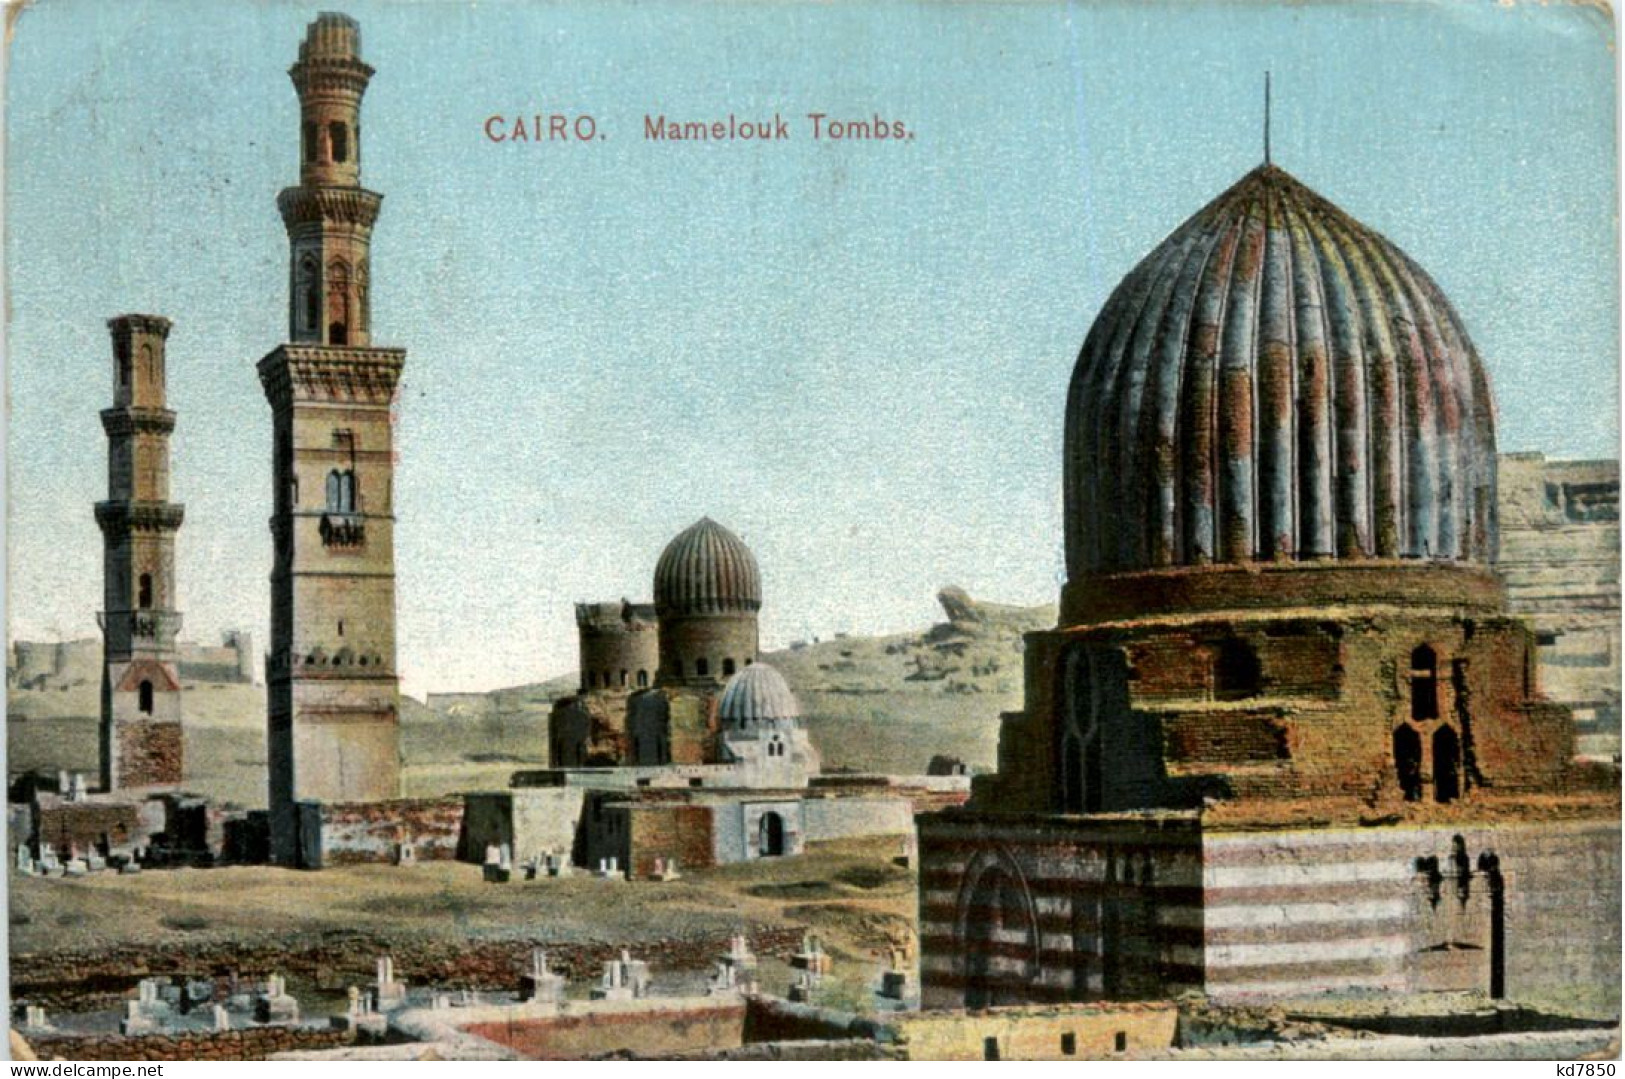 Cairo - Mamelouk Tombs - Caïro